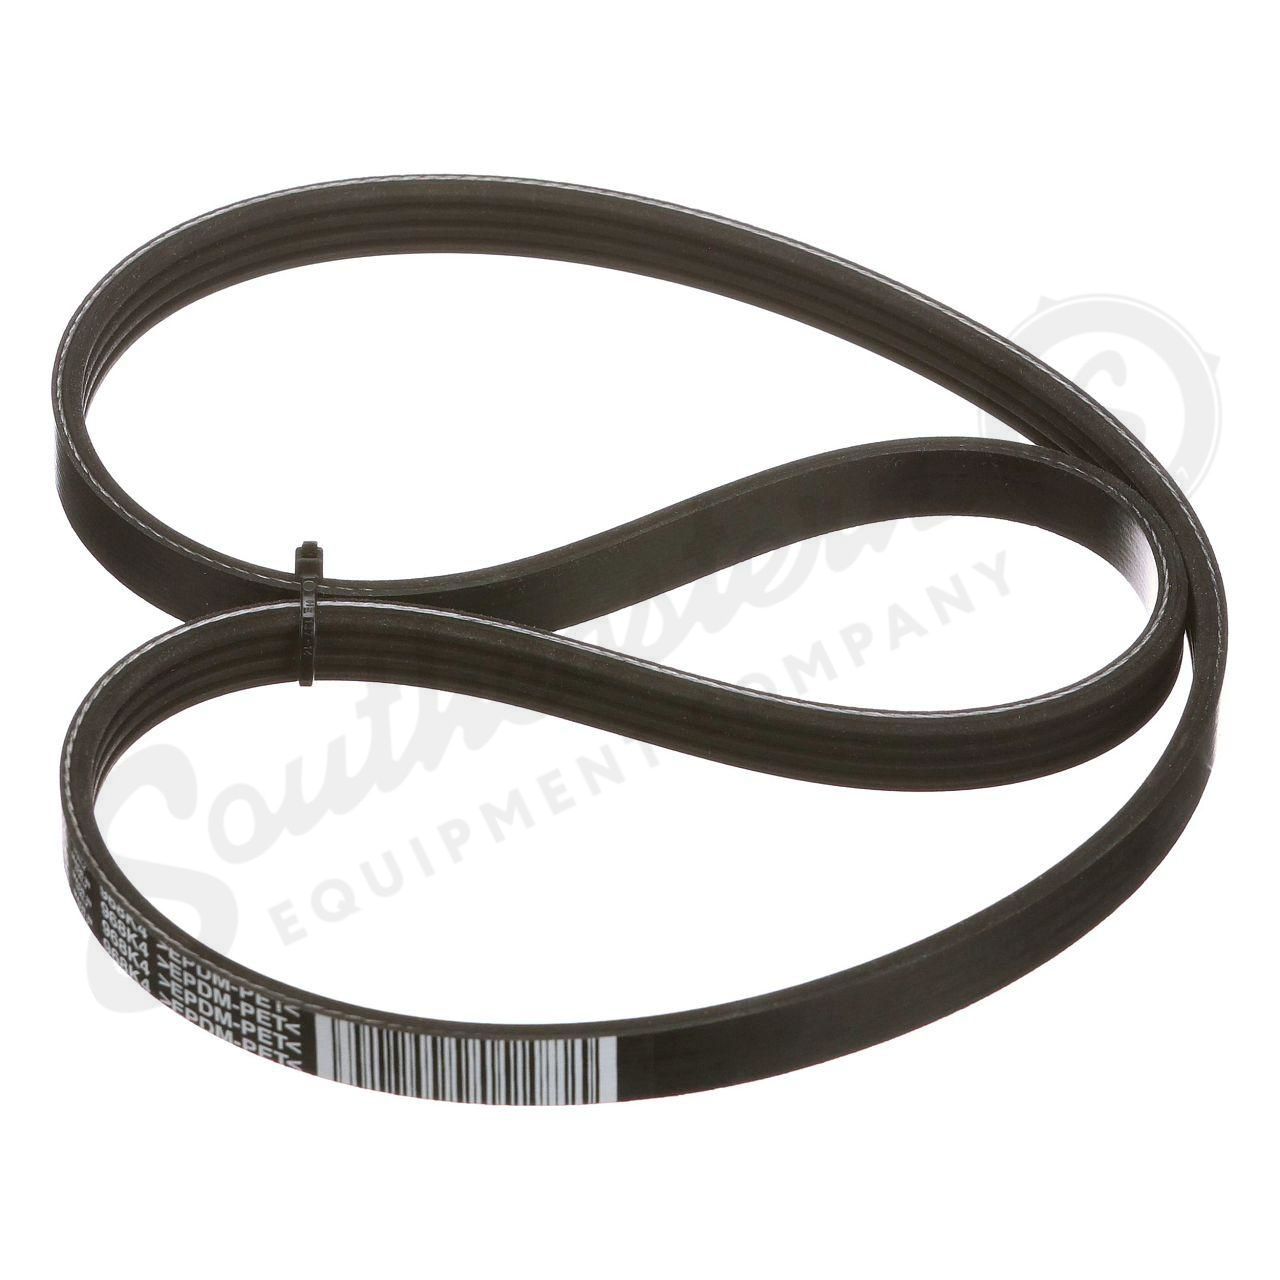 Case Construction Trailer Air Brakes Belt - 14.04mm W x 968mmL x 4 Ribs  #87300105